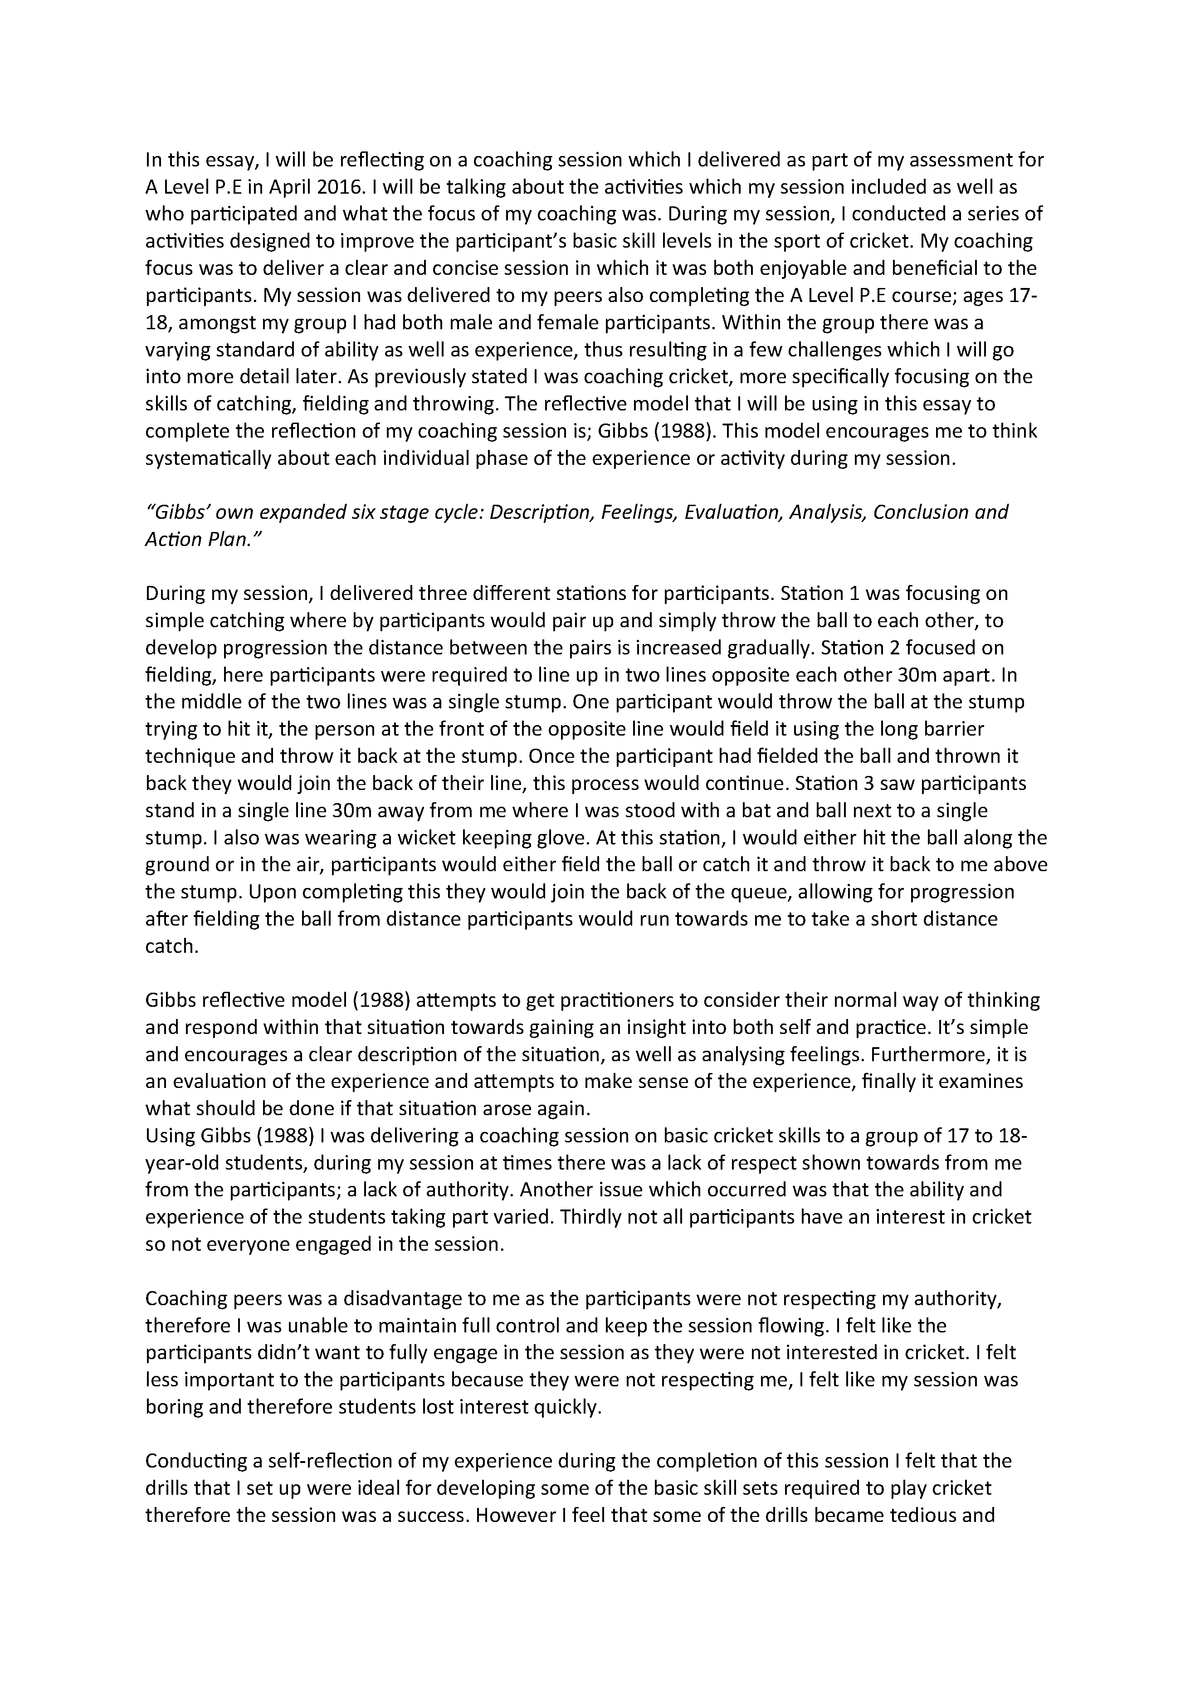 Self reflection essay